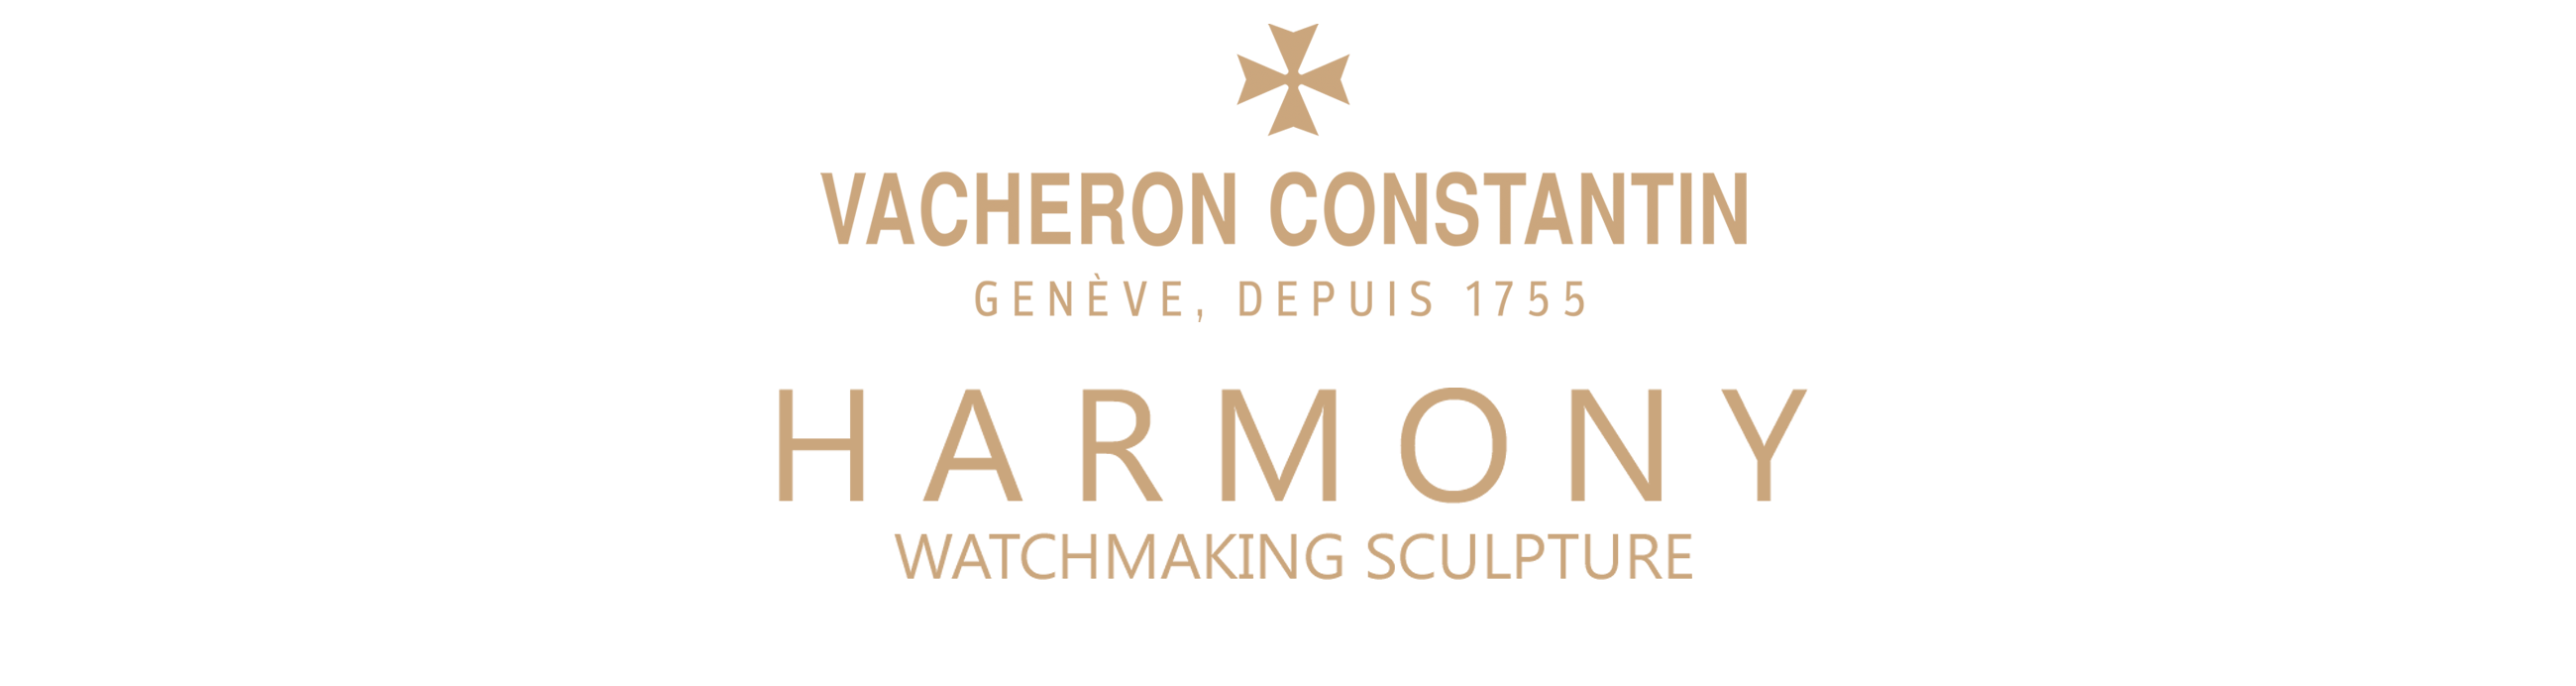 Vacheron Constantin Logo - The new “Harmony” collection